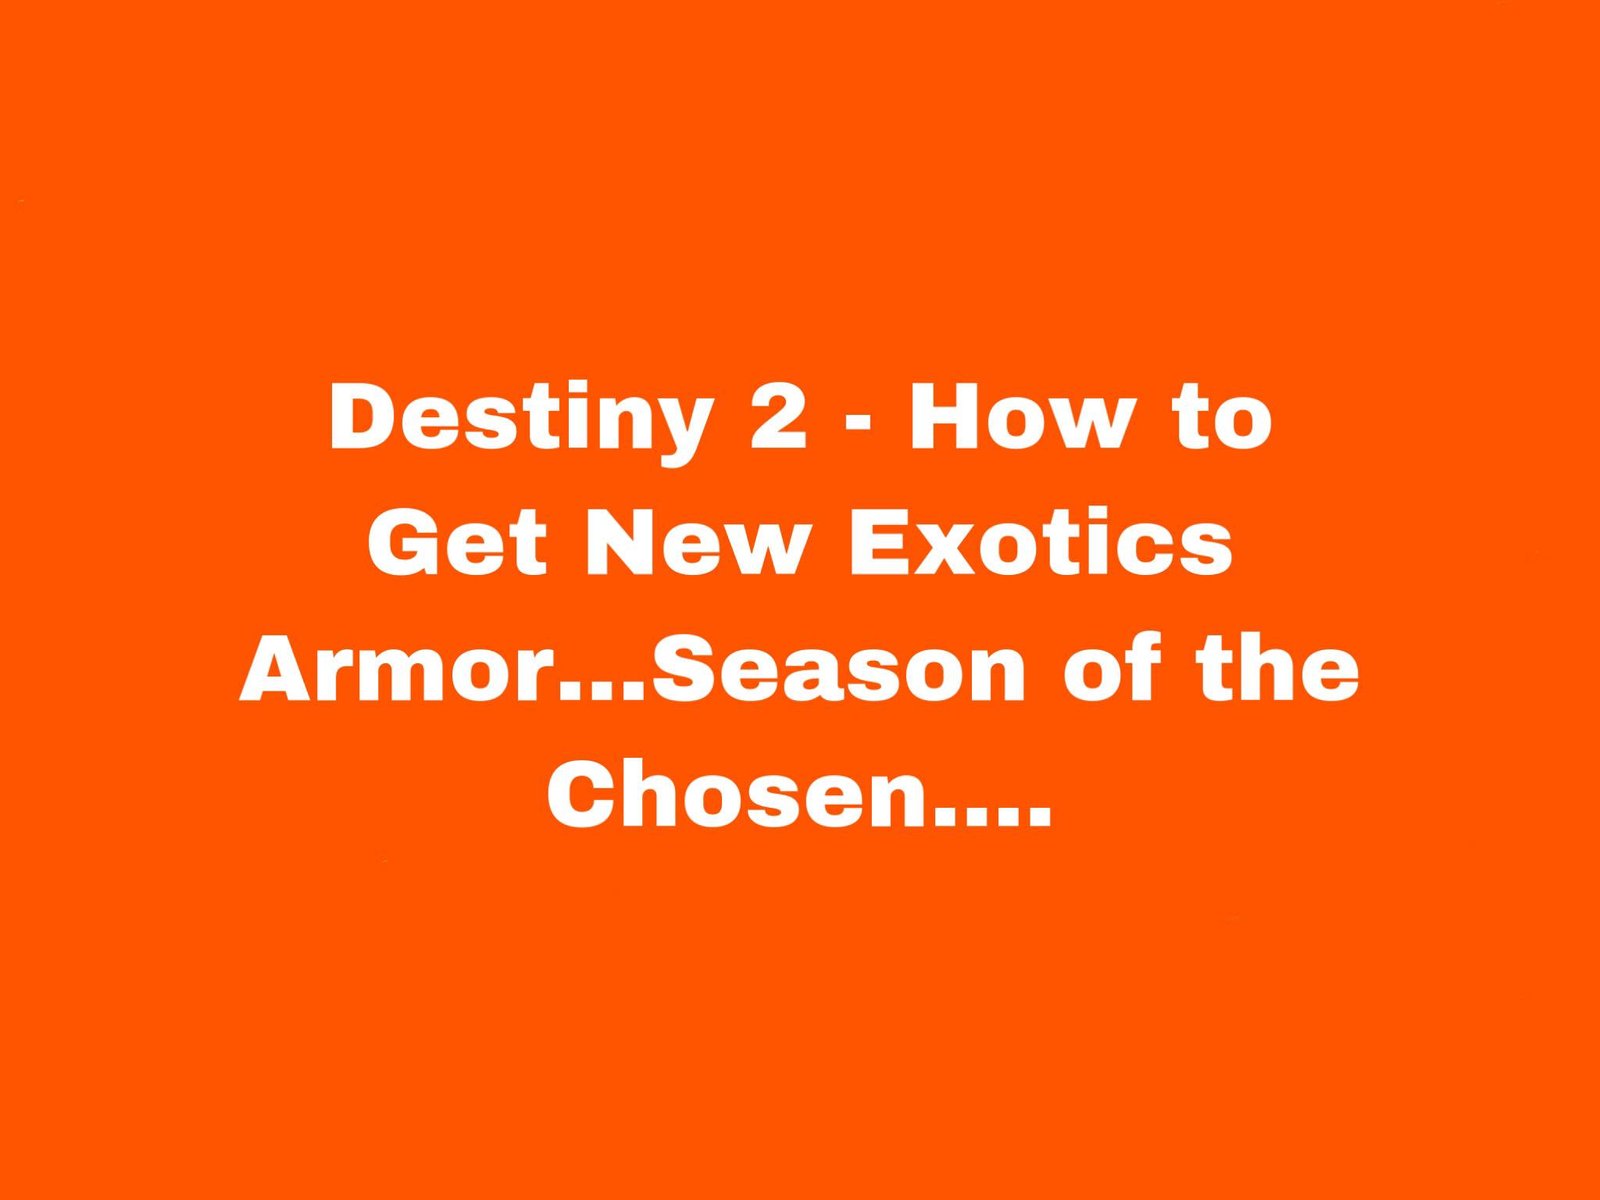 https://shyoz.com/wp-content/uploads/2021/02/How-to-Get-New-Exotics-Armor.jpg